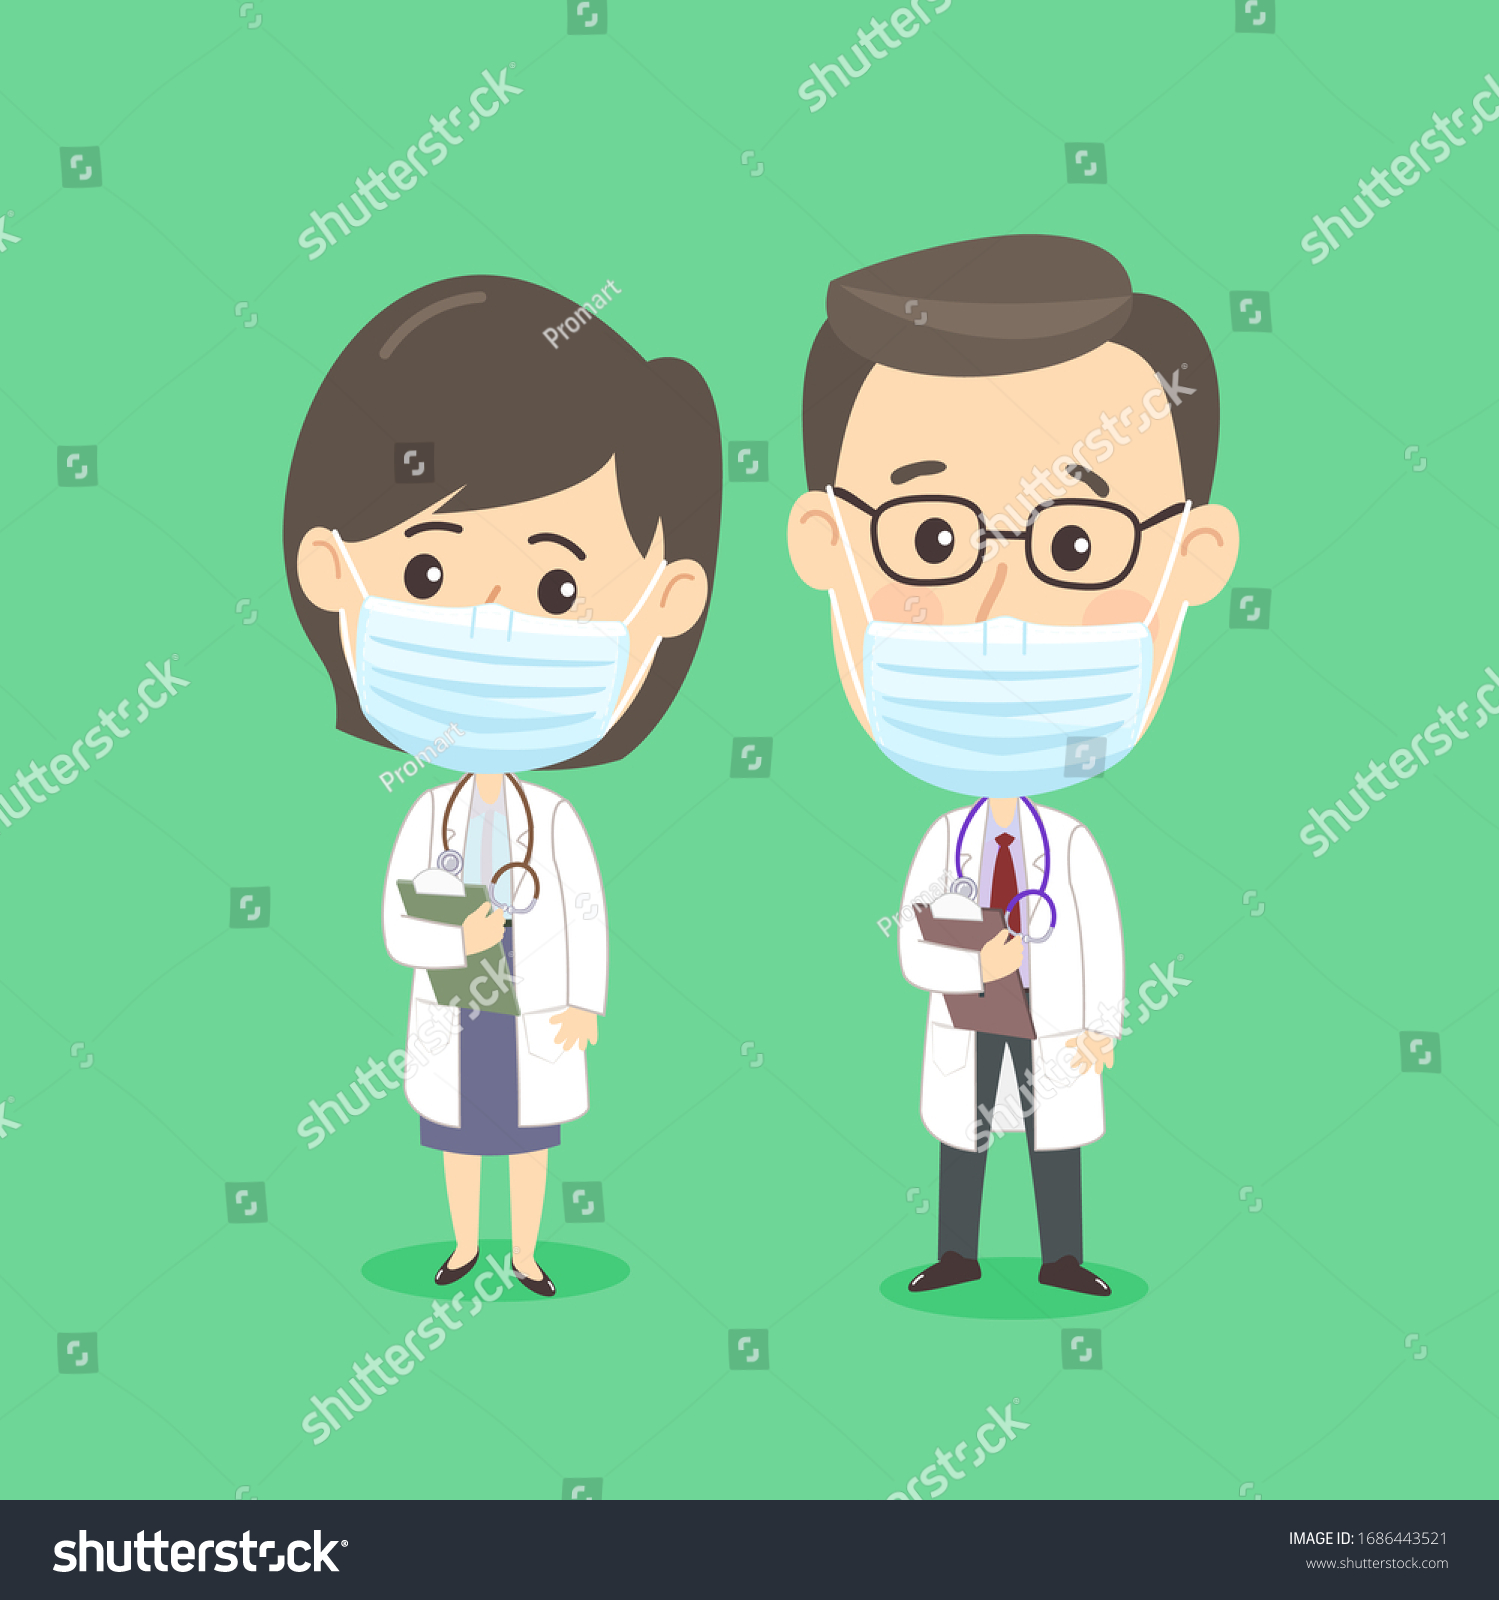 Cartoon Cute Male Female Doctor Vector Stock Vector Royalty Free 1686443521 Shutterstock 3441